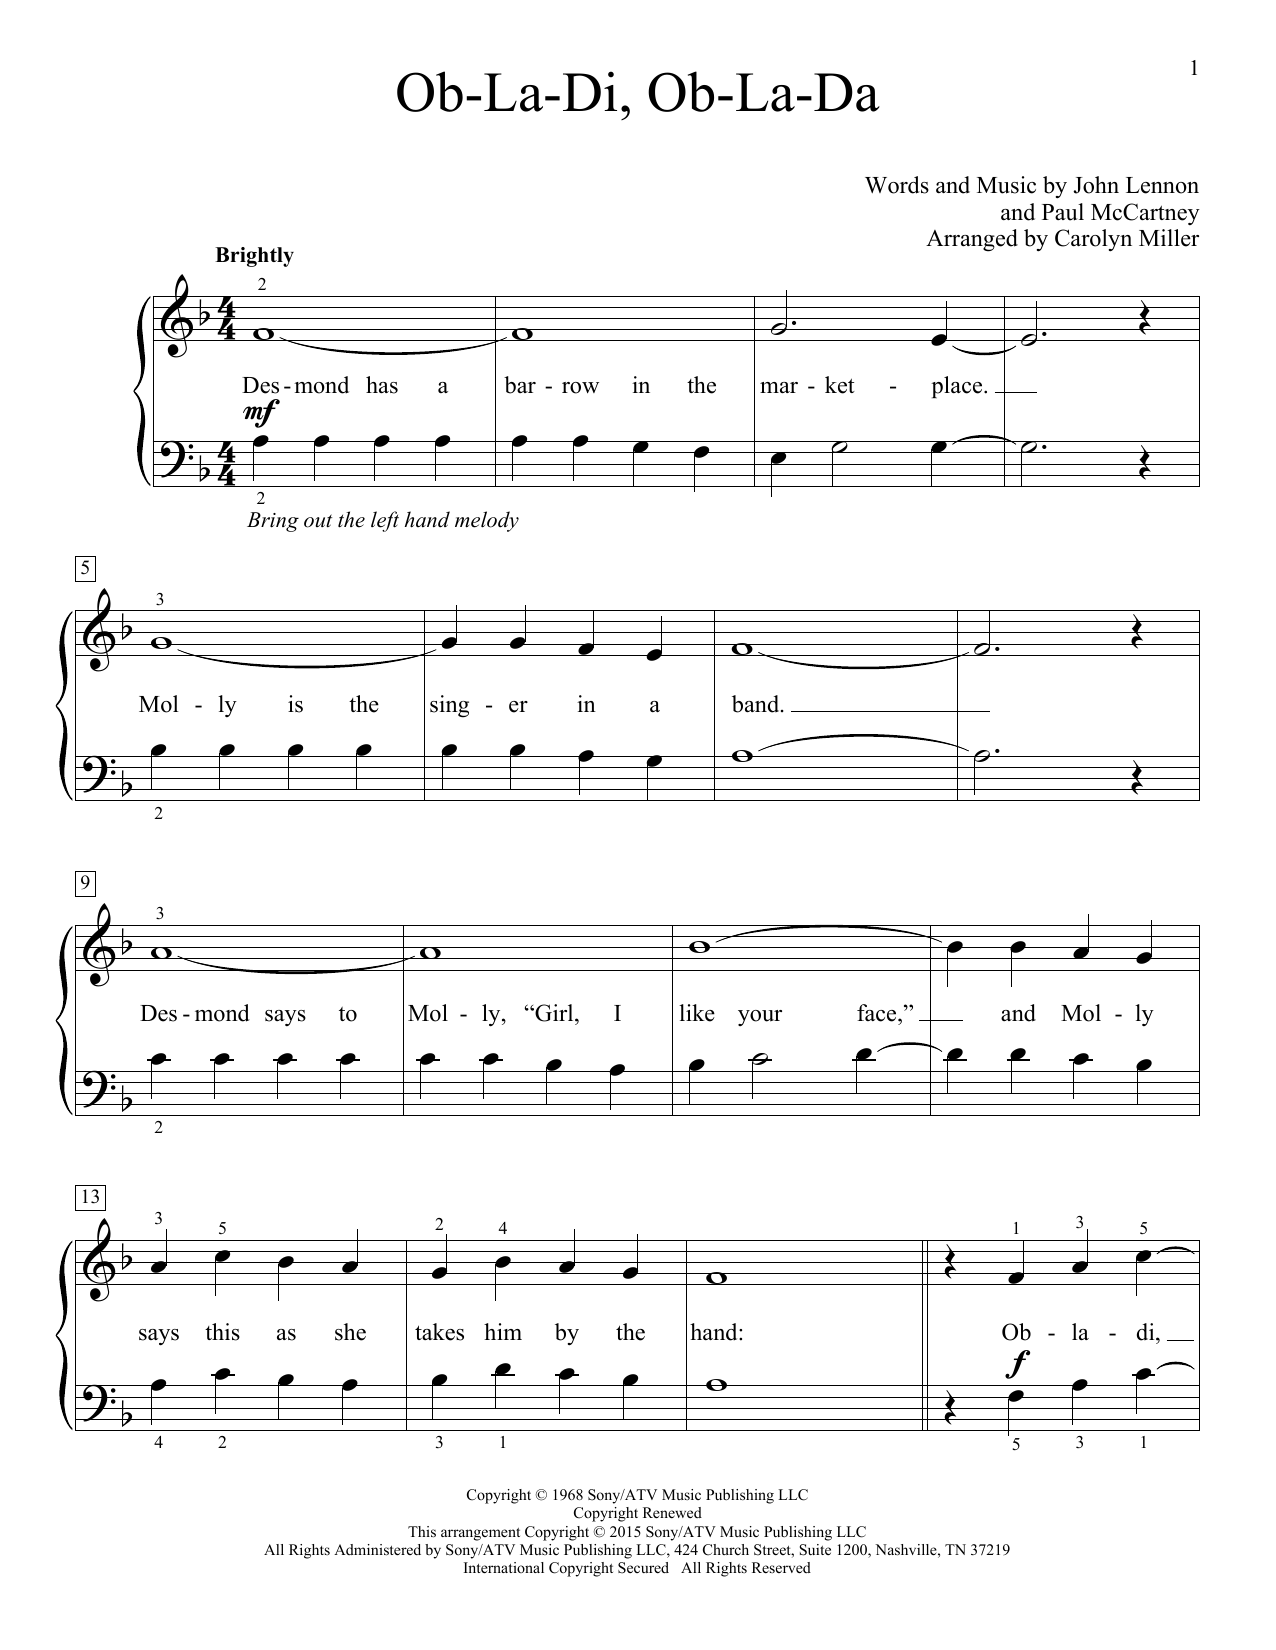 Download The Beatles Ob-La-Di, Ob-La-Da Sheet Music and learn how to play Easy Piano PDF digital score in minutes